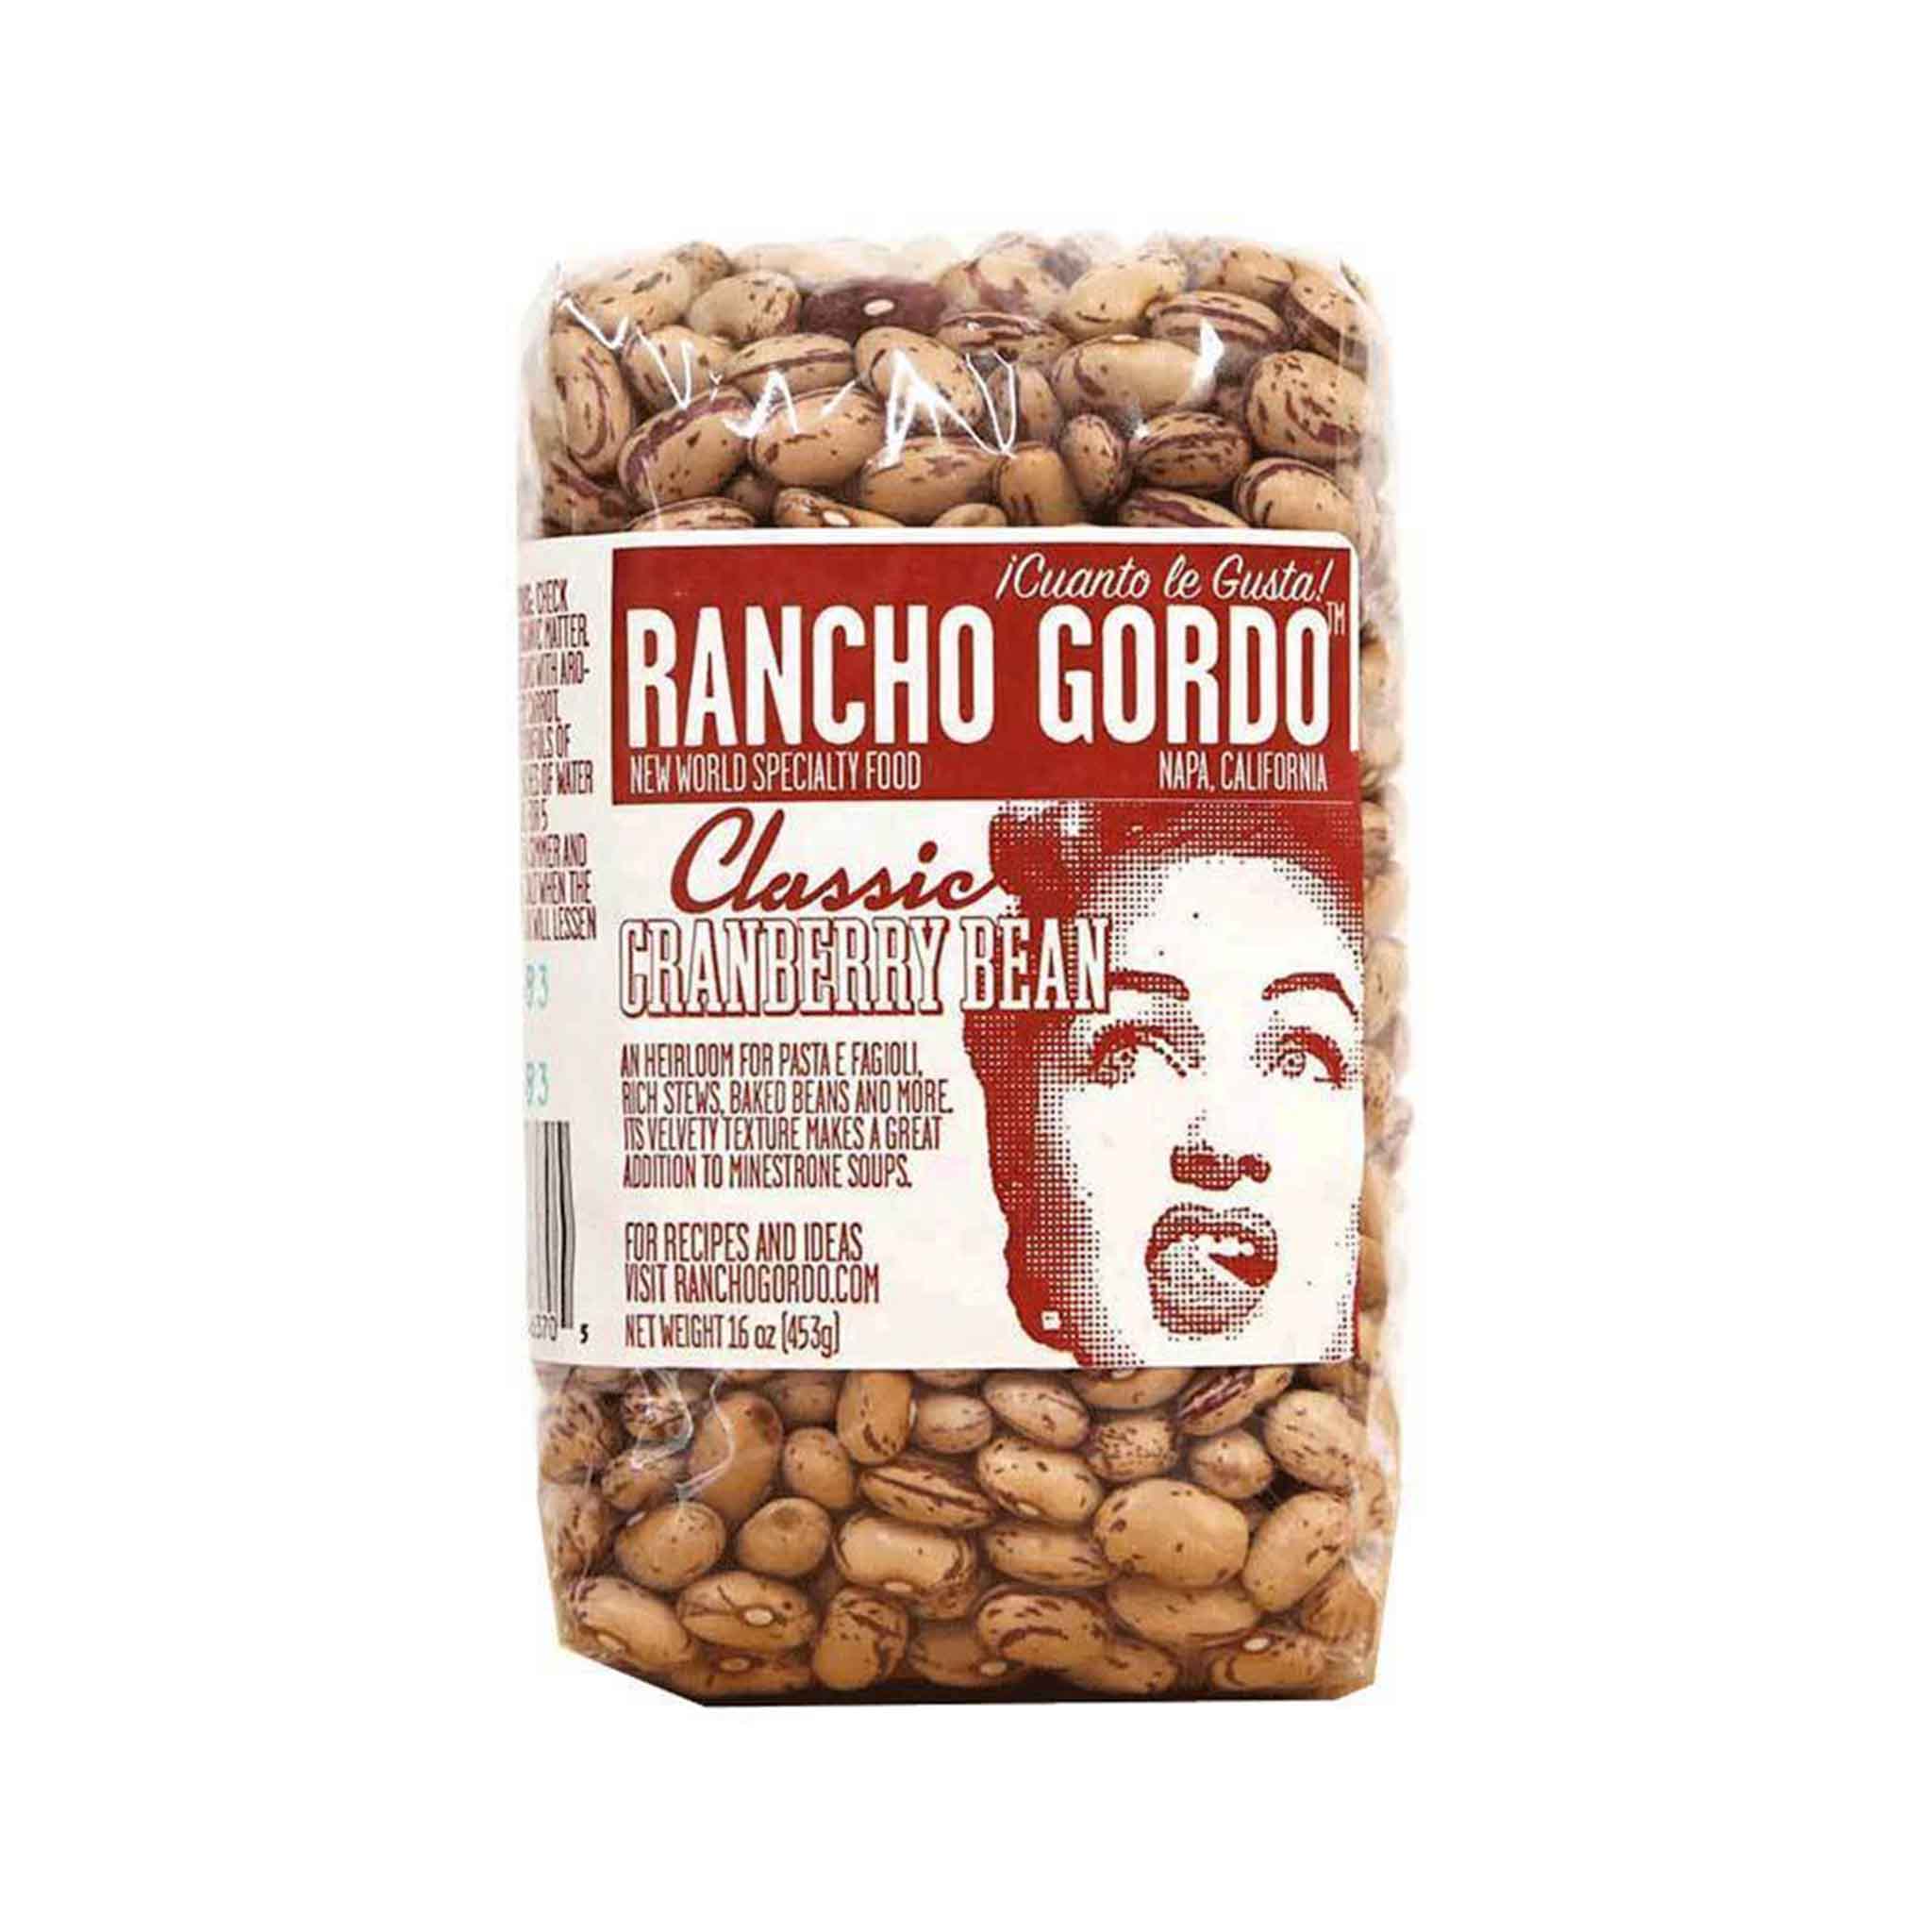 Rancho Gordo Classic Cranberry Beans